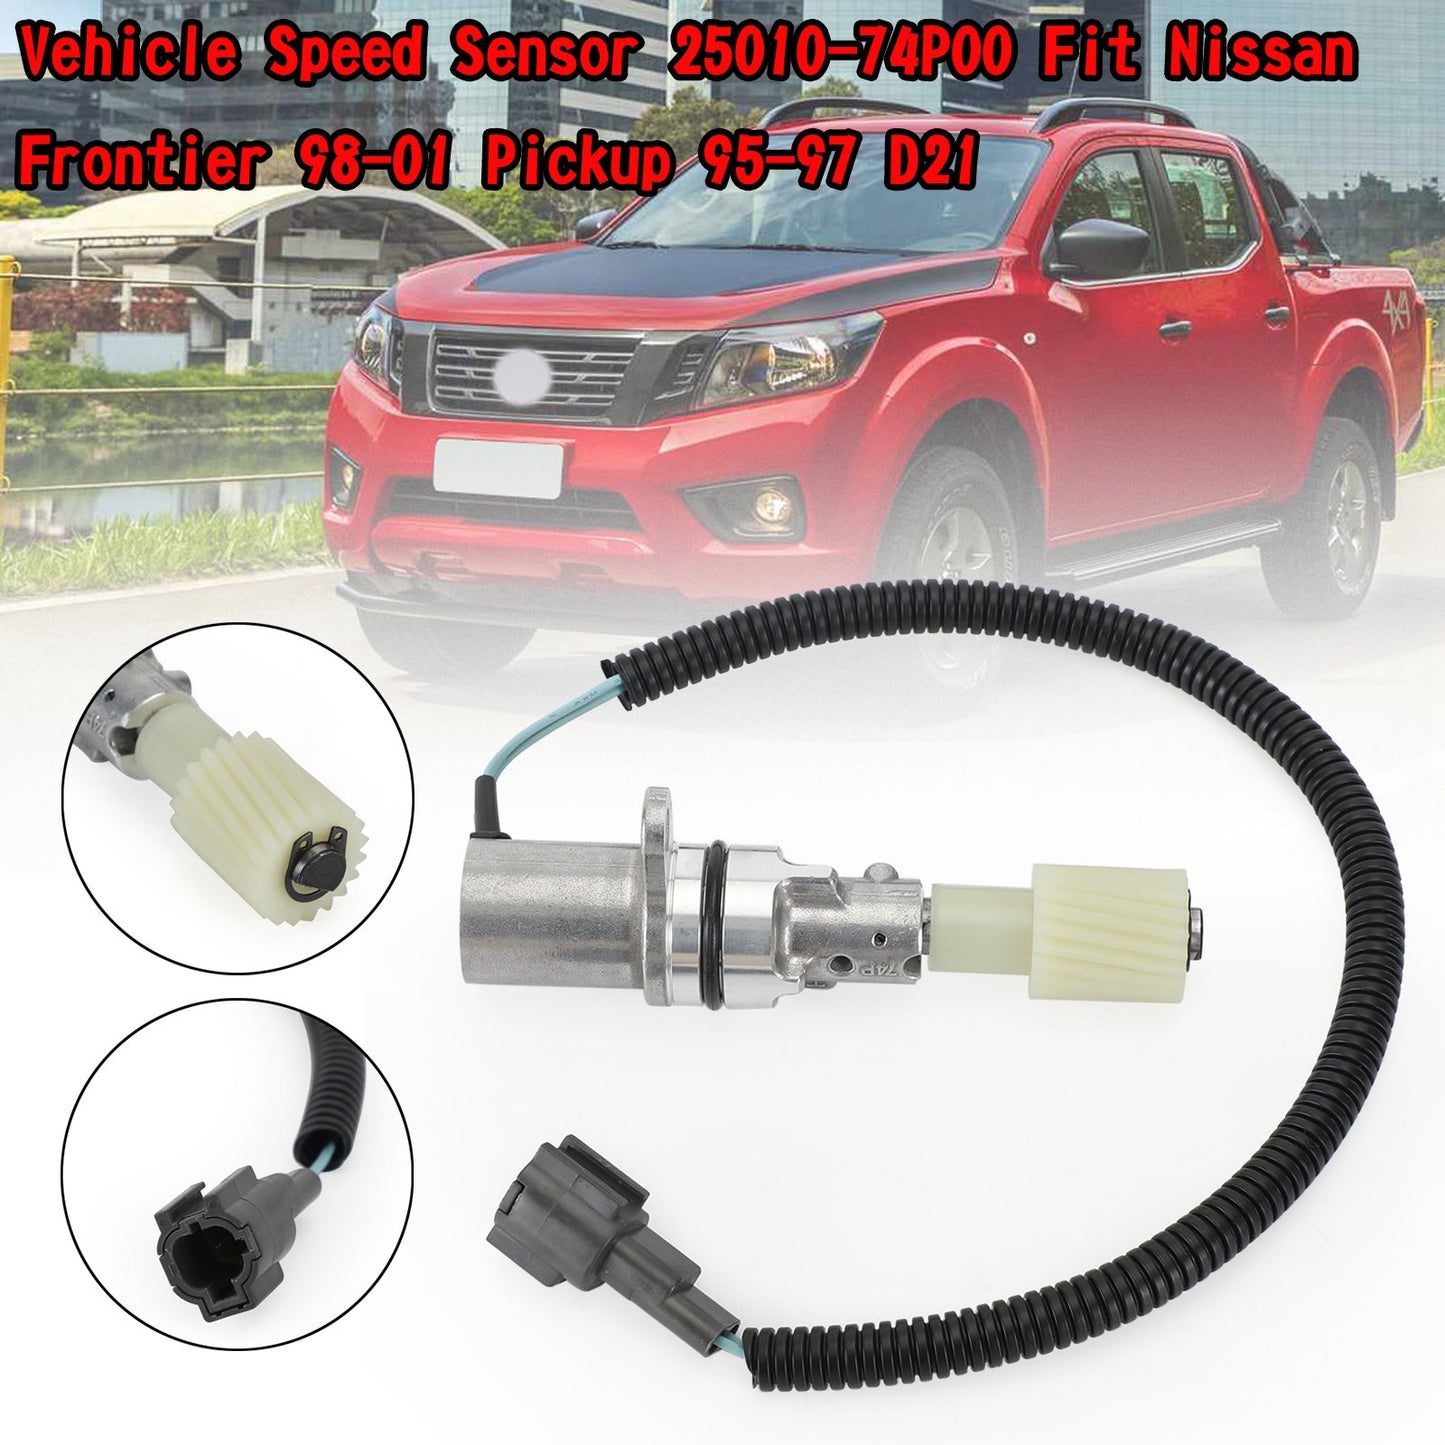 Vehicle Speed Sensor 25010-74P00 Fit Nissan Frontier 98-01 Pickup 95-97 D21